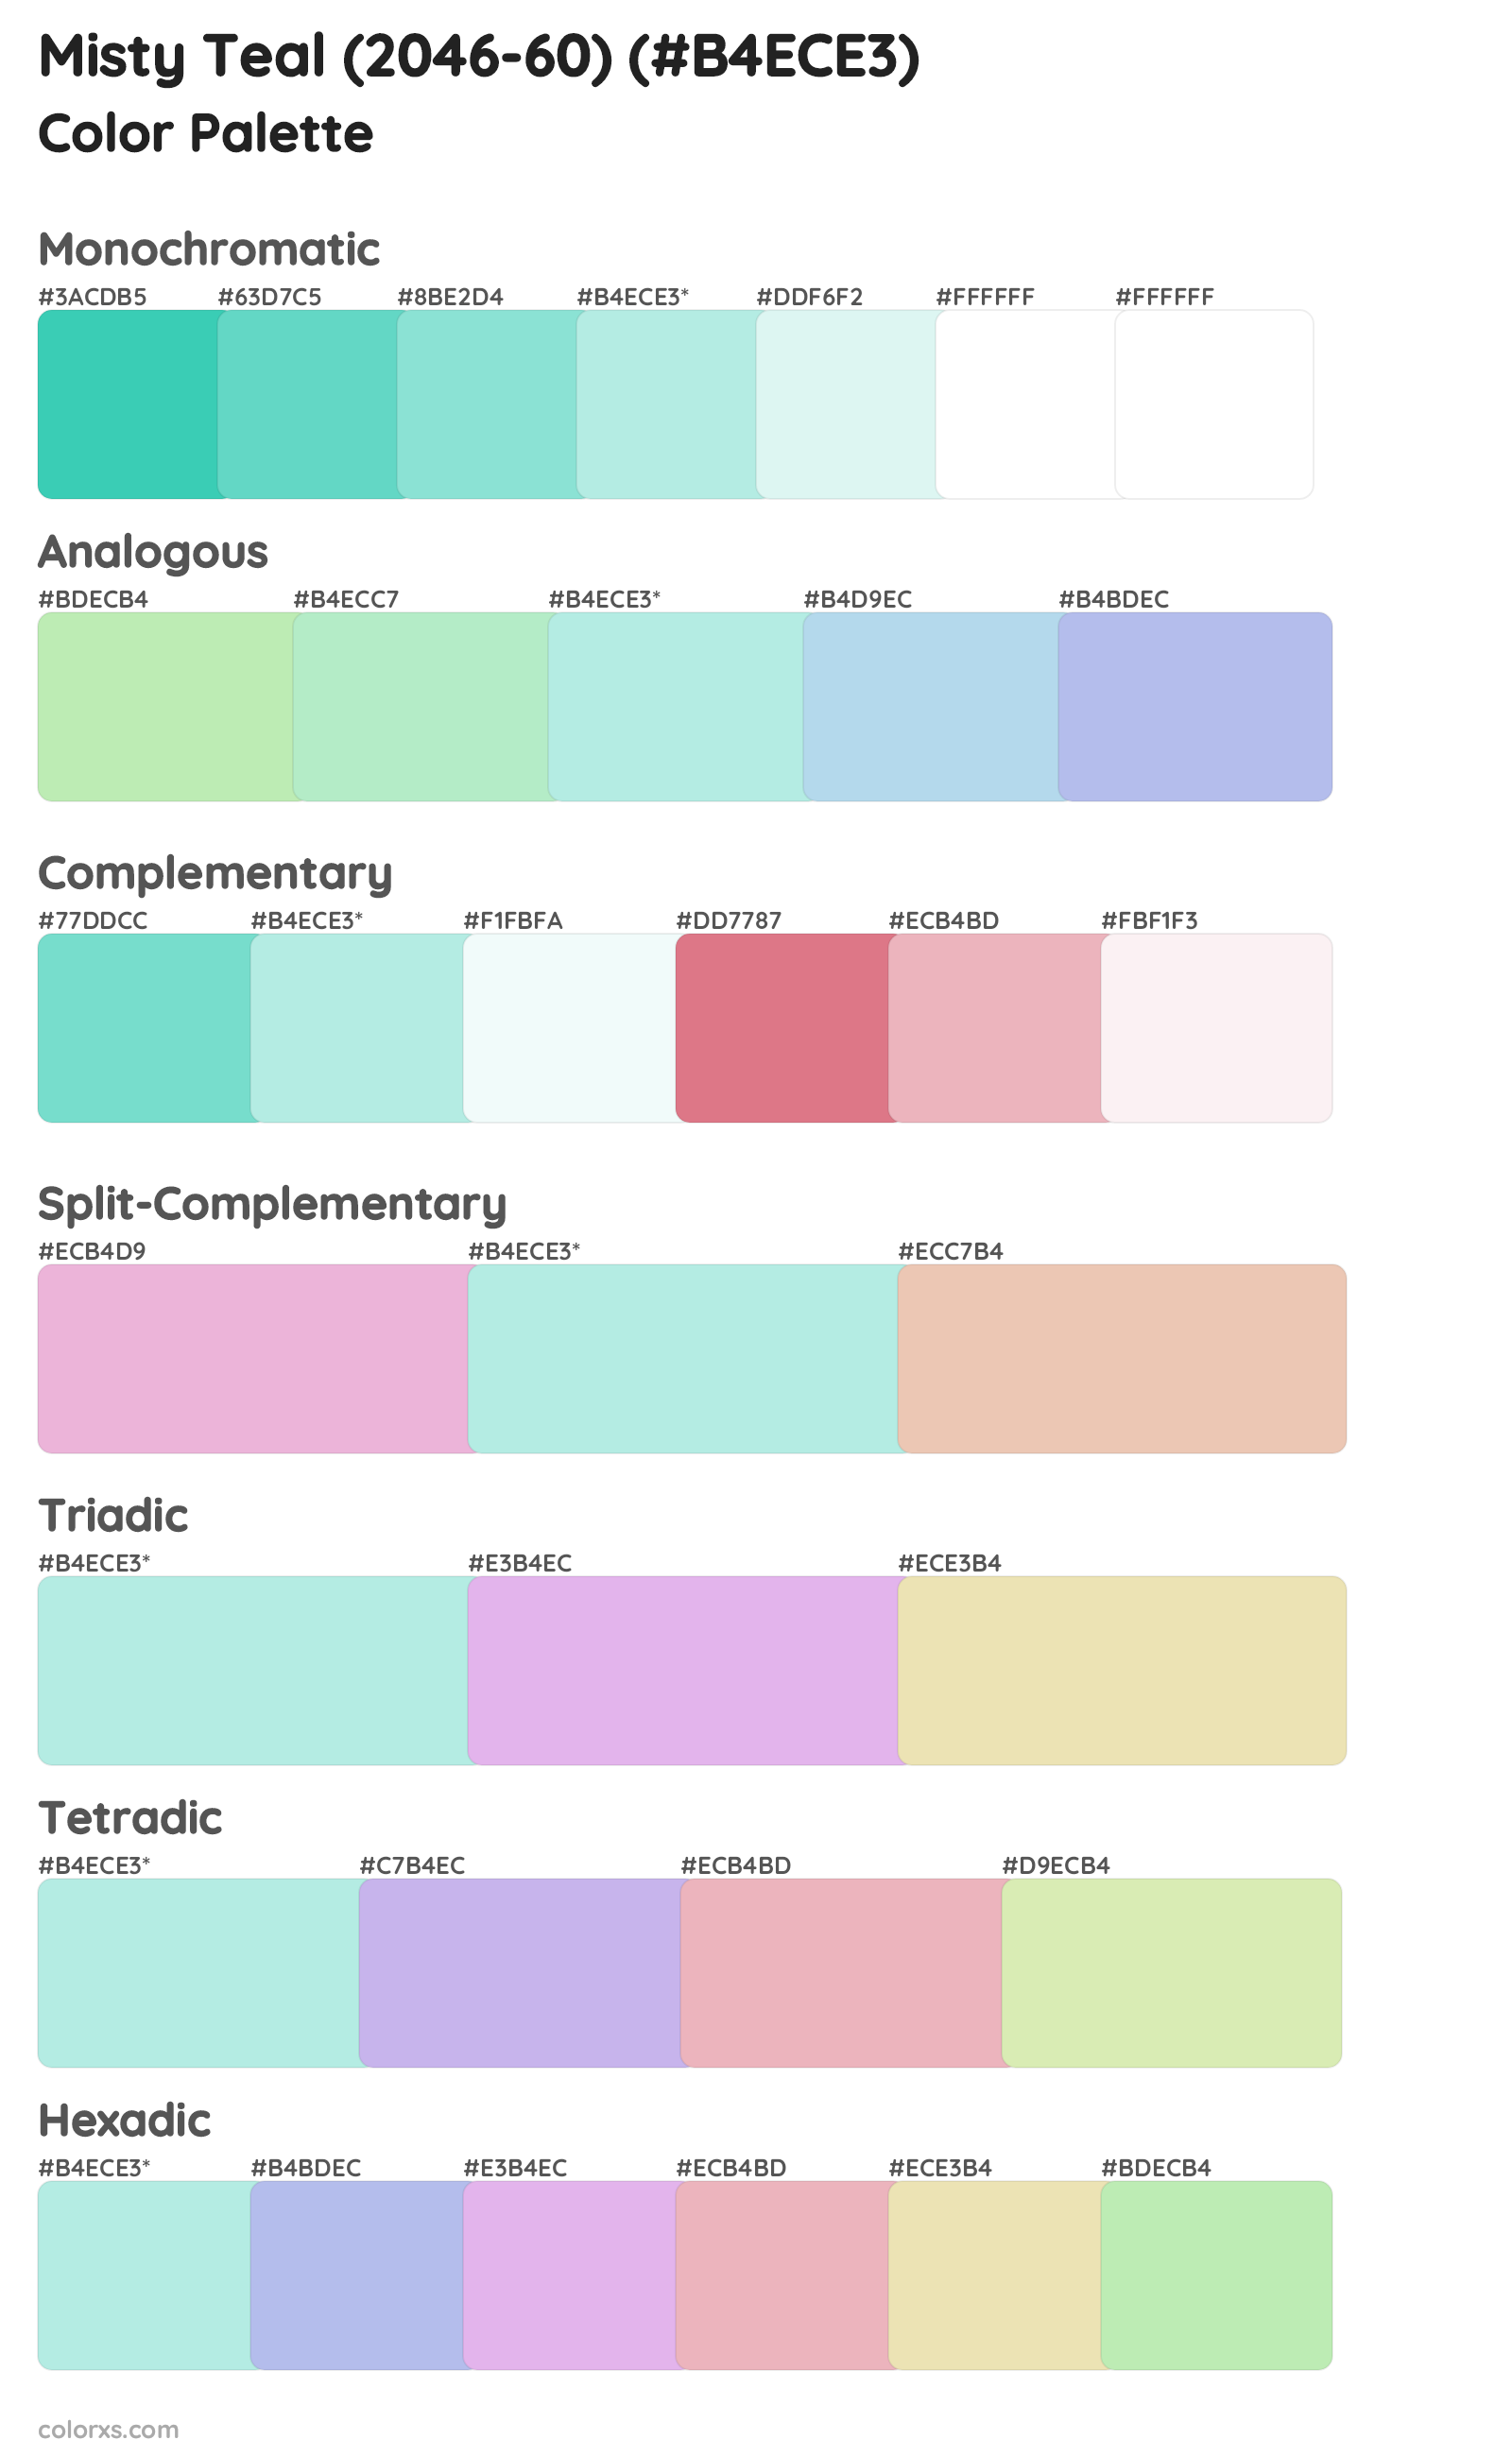 Misty Teal (2046-60) Color Scheme Palettes